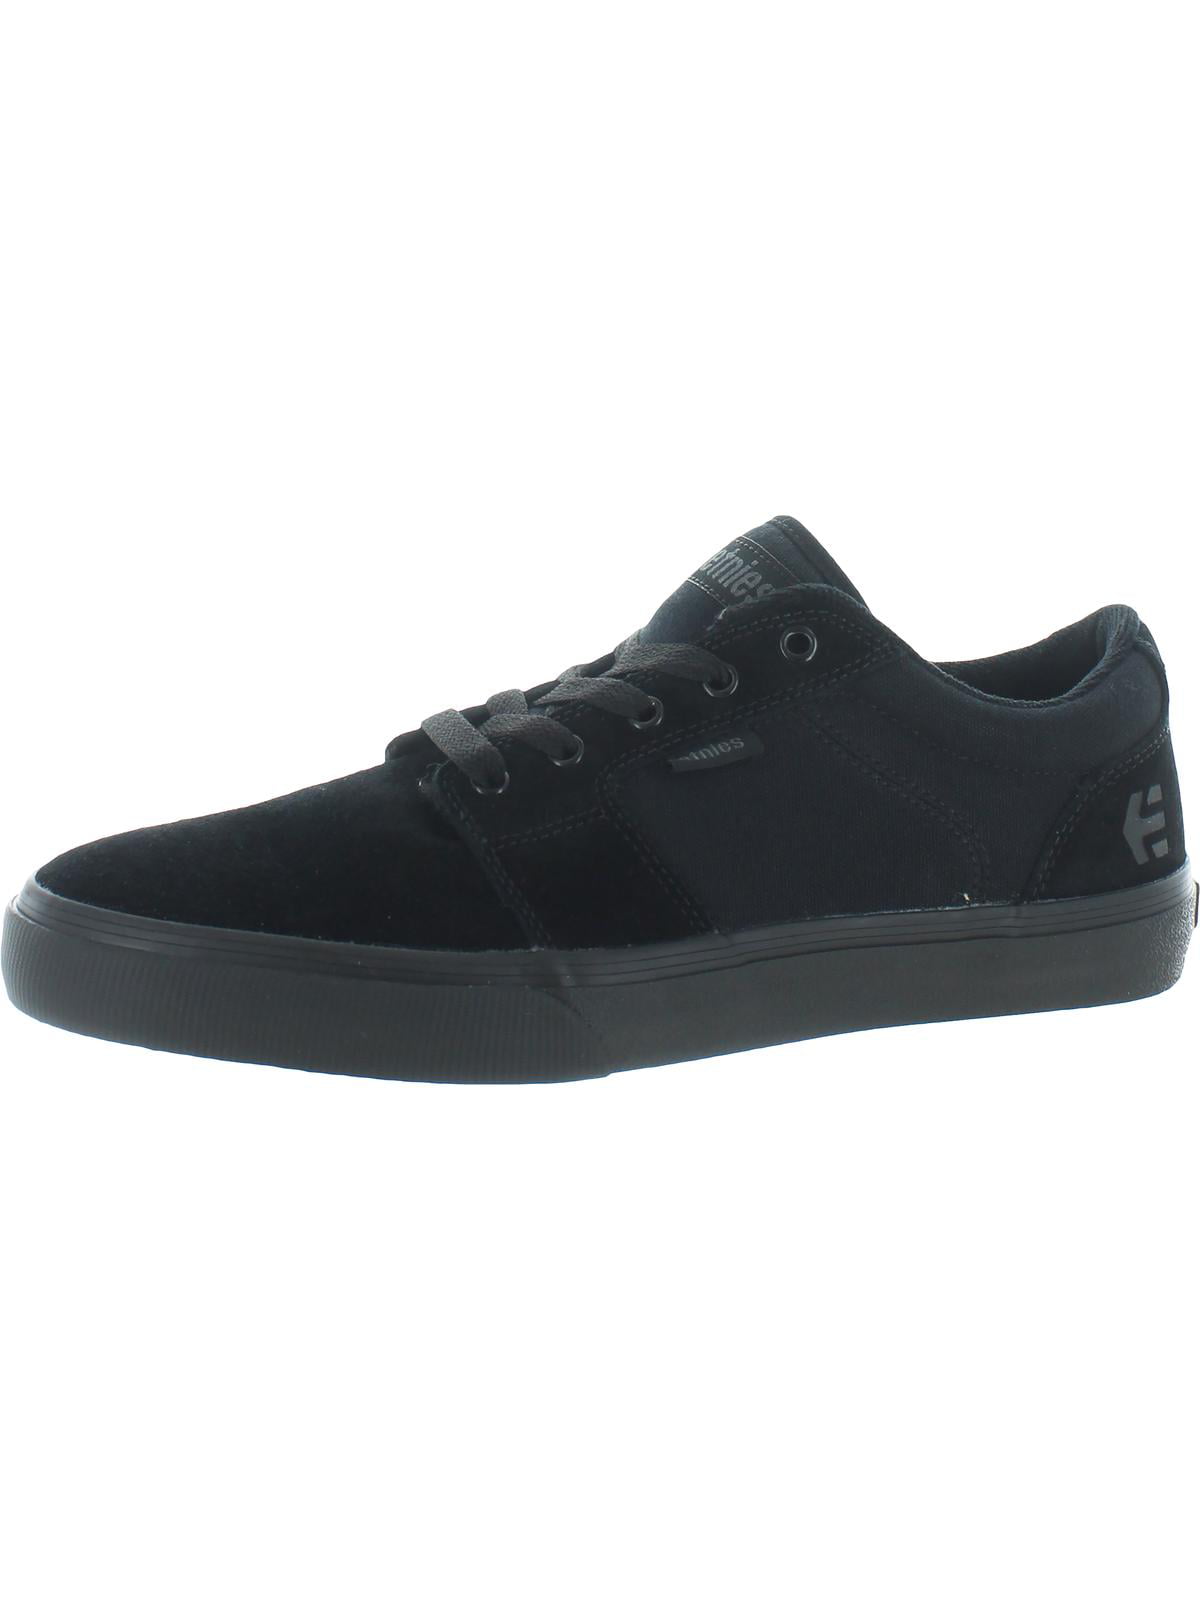 ETNIES Barge LS Trainer Sneaker Skate Board Shoes Black Size 9.5 New 